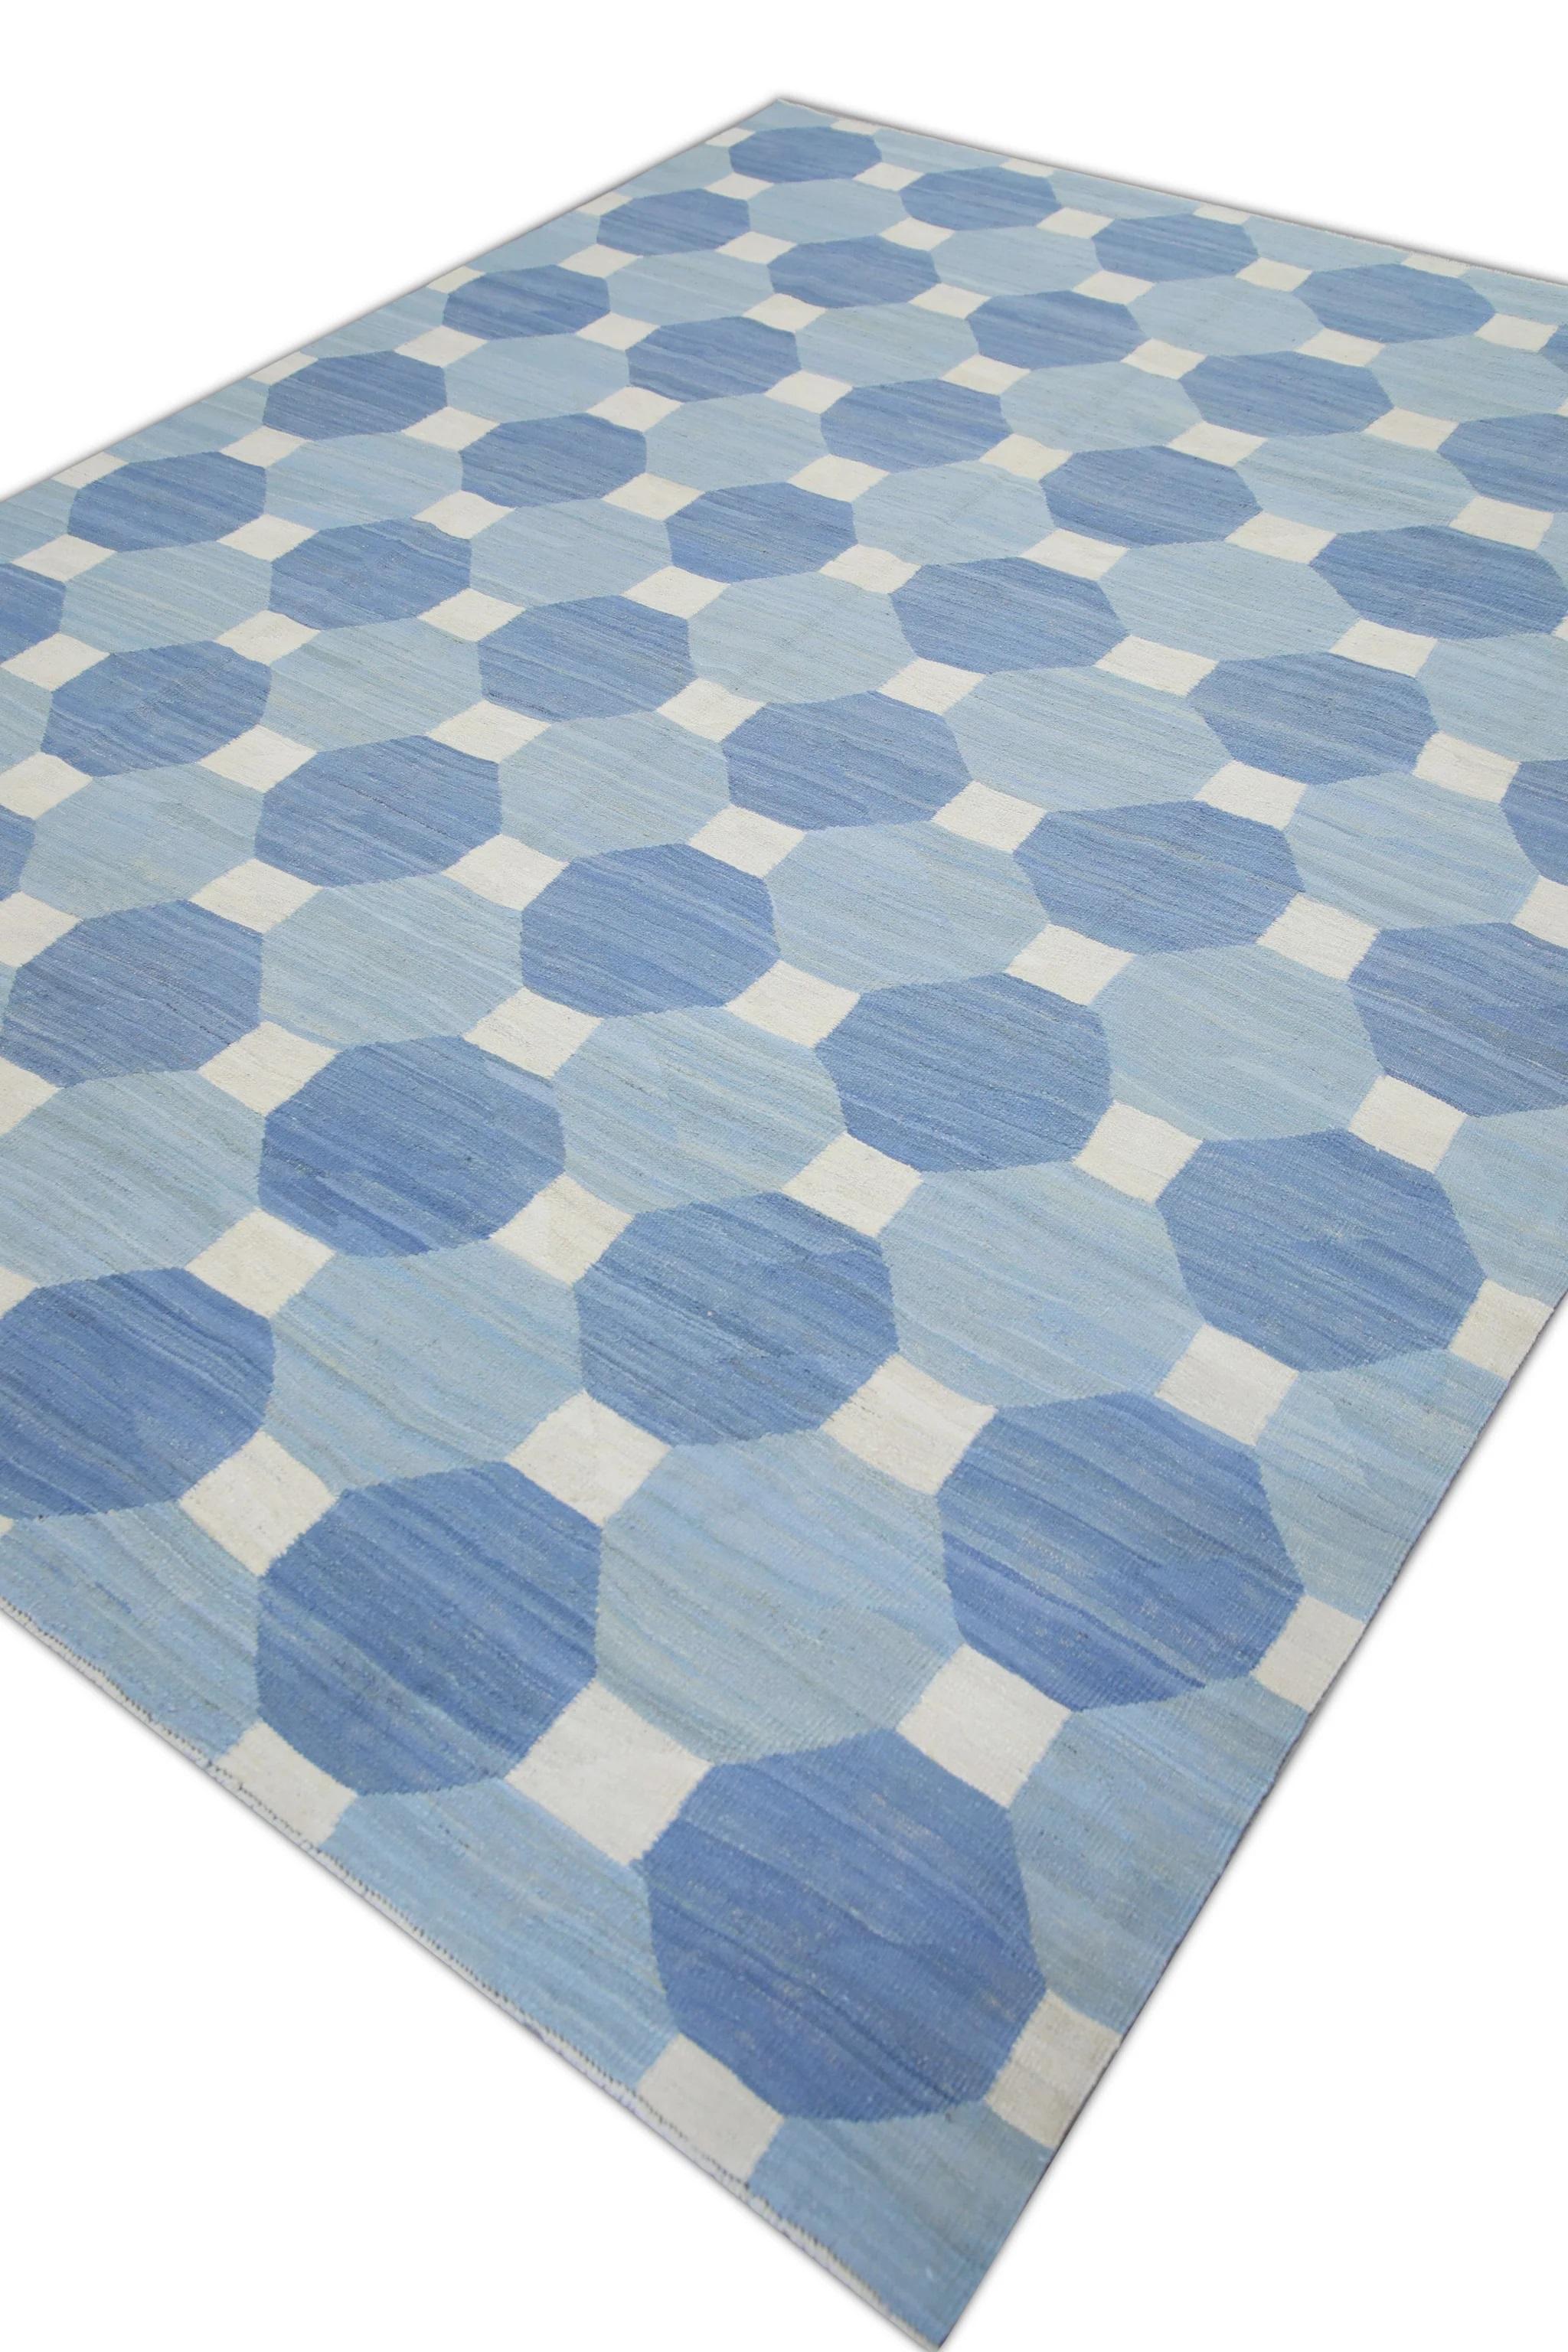 Turkish Blue Flatweave Handmade Wool Rug in Geometric Design 8'1